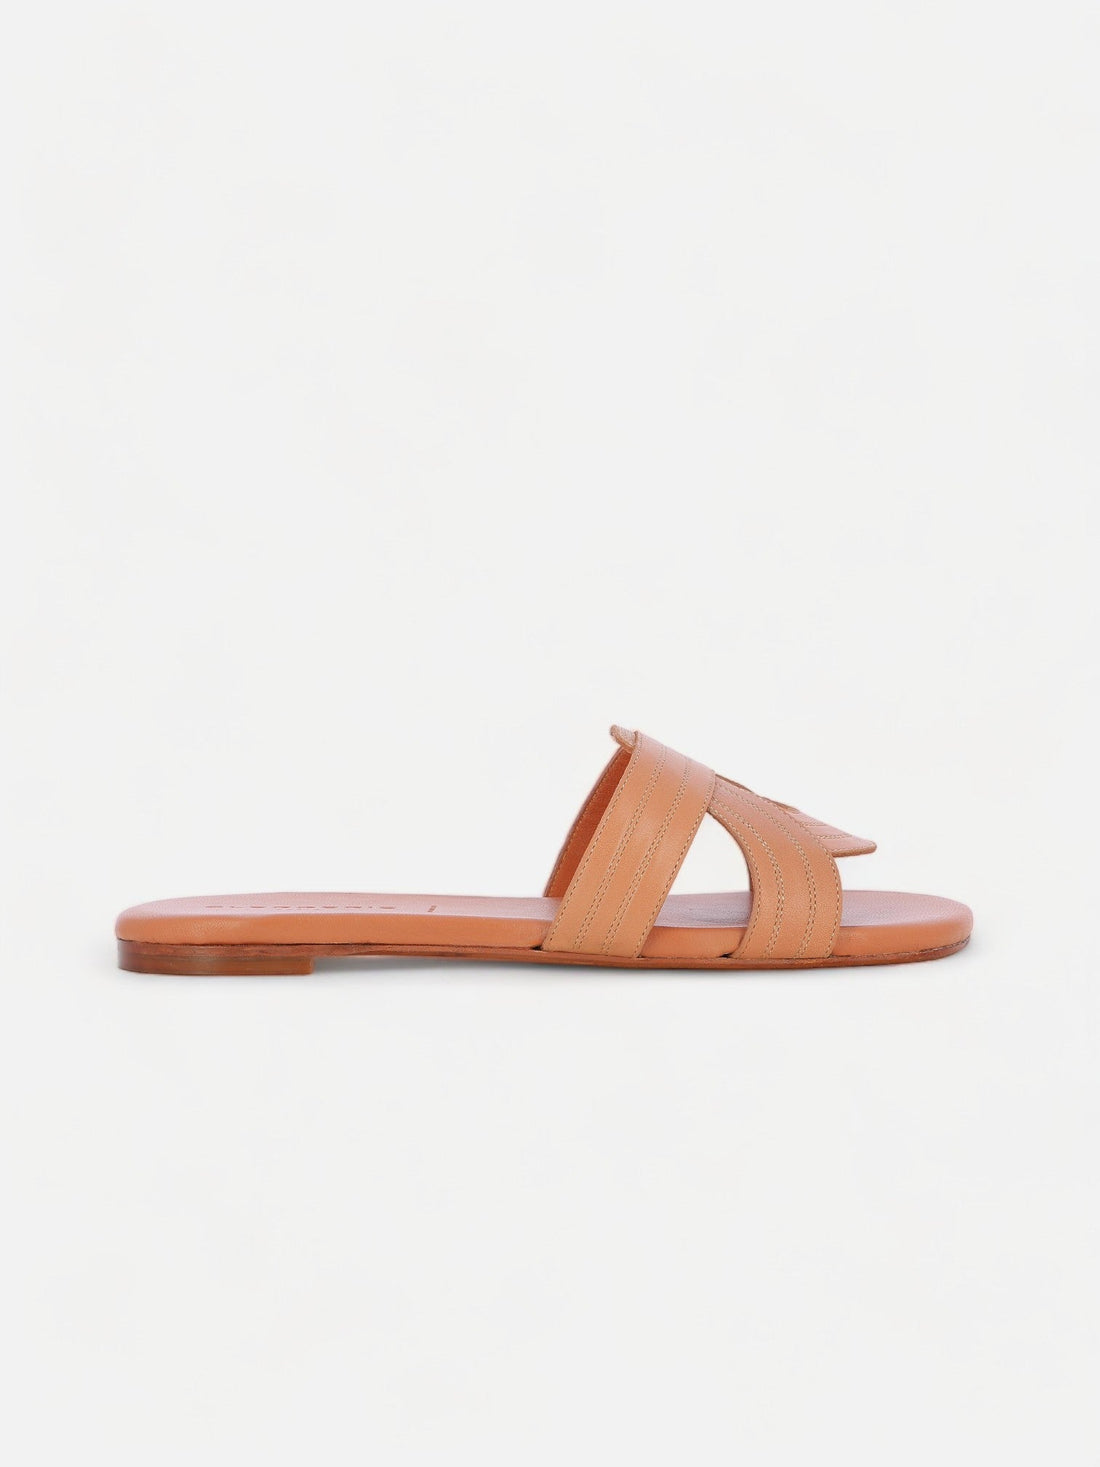 SANDALS - IVORY sandals, calfskin brown - 3606063995900 - Clergerie Paris - Europe